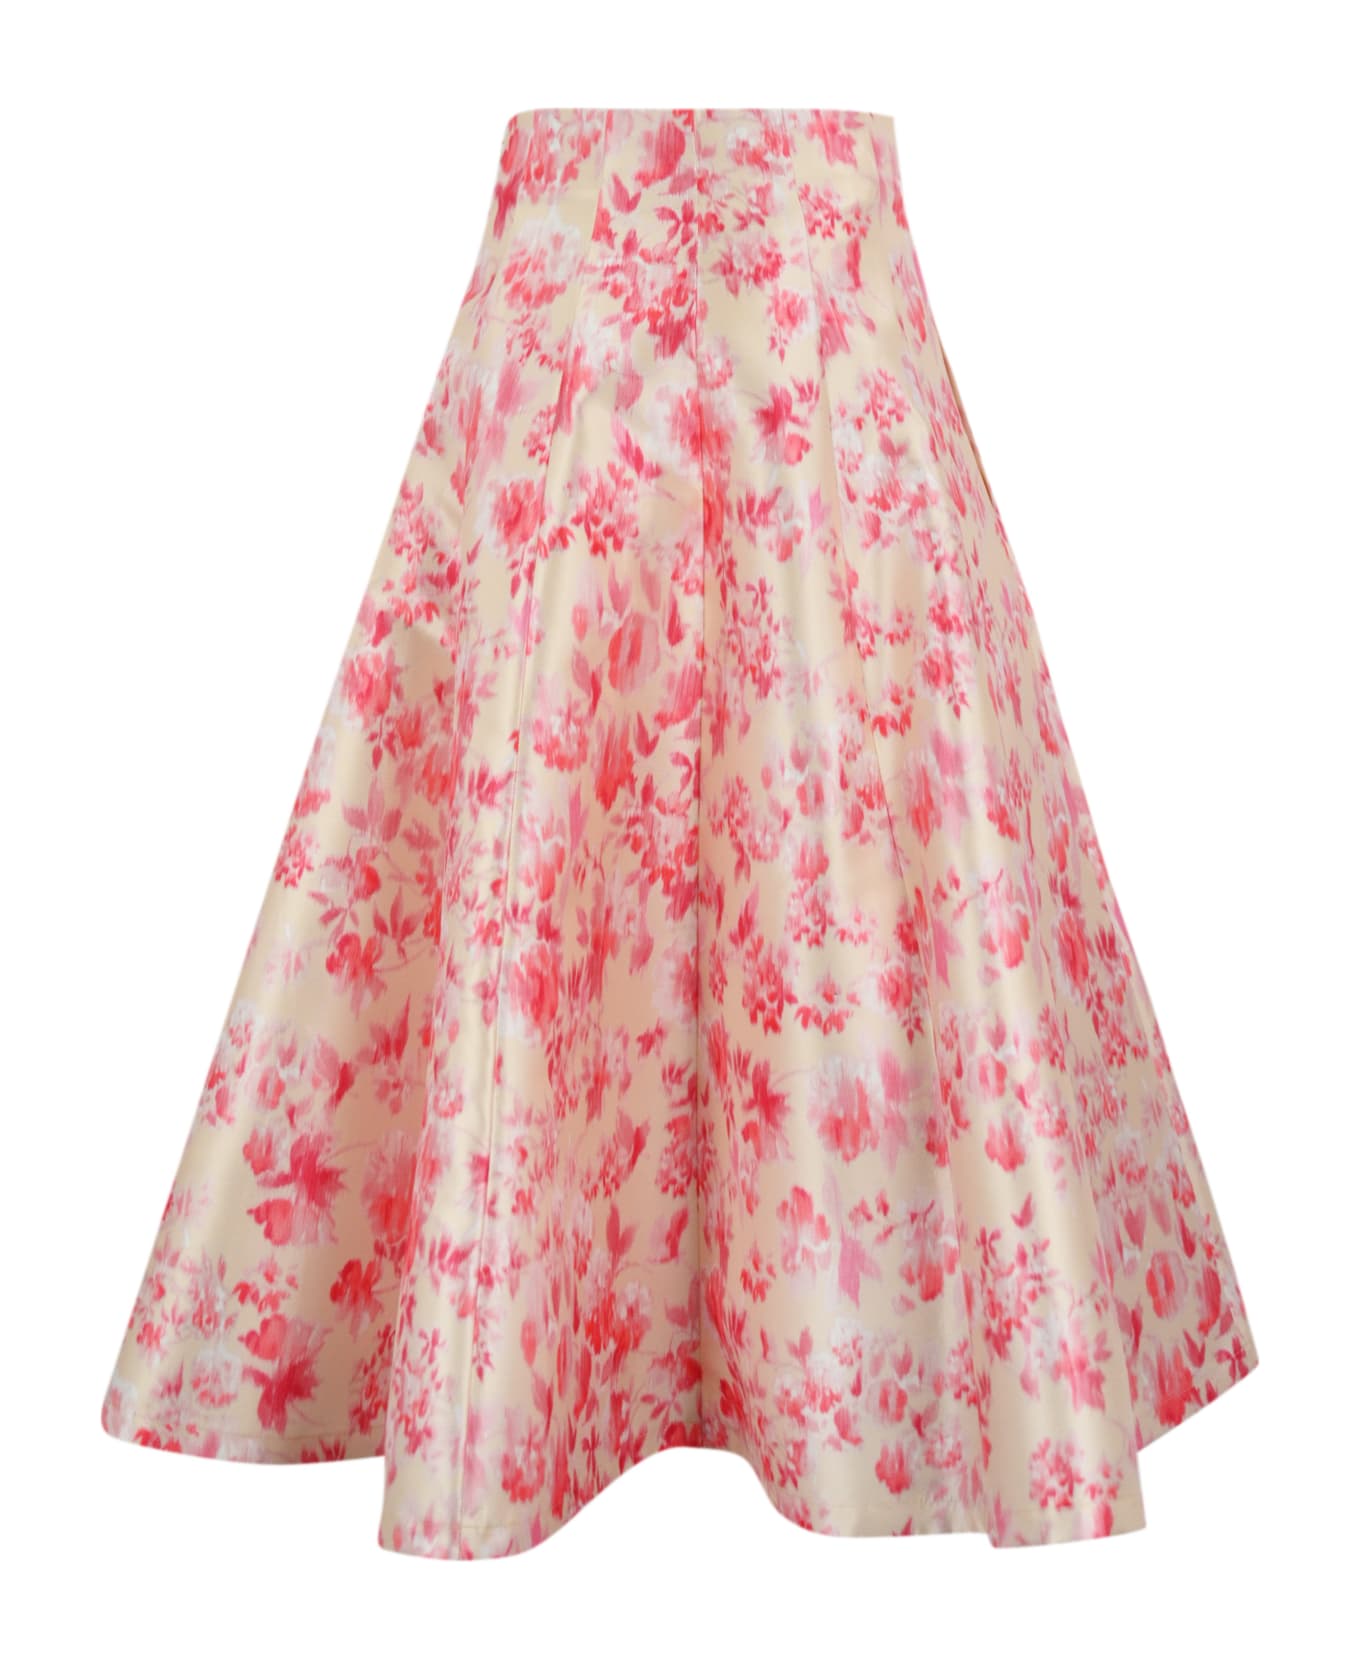 Philosophy di Lorenzo Serafini Radzmir Skirt With Floral Print - Bianco/rosso スカート